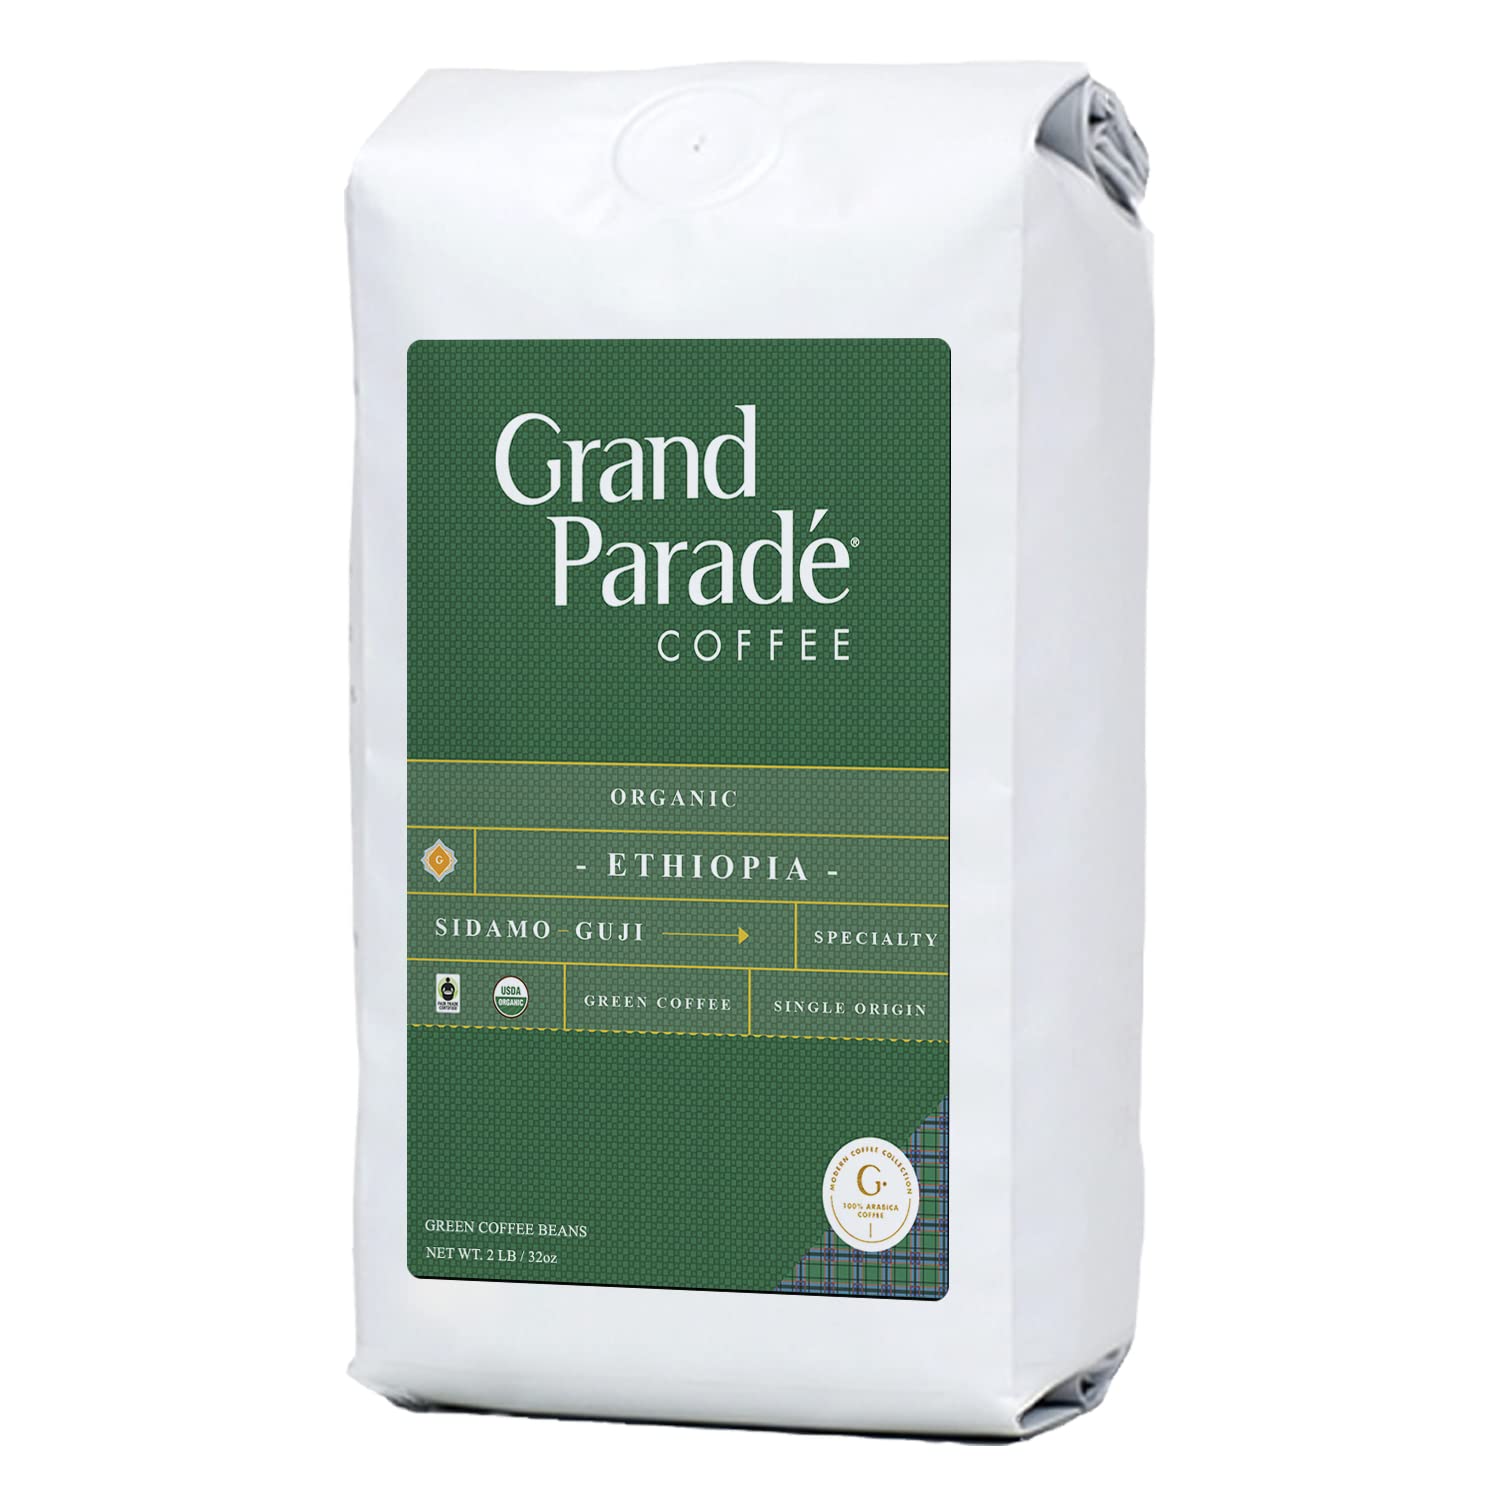 Grand Parade Coffee, Unroasted Green Coffee Beans - Organic Ethiopian Sidamo Guji - Grade 1 Single Origin - Specialty Arabica - Fair Trade